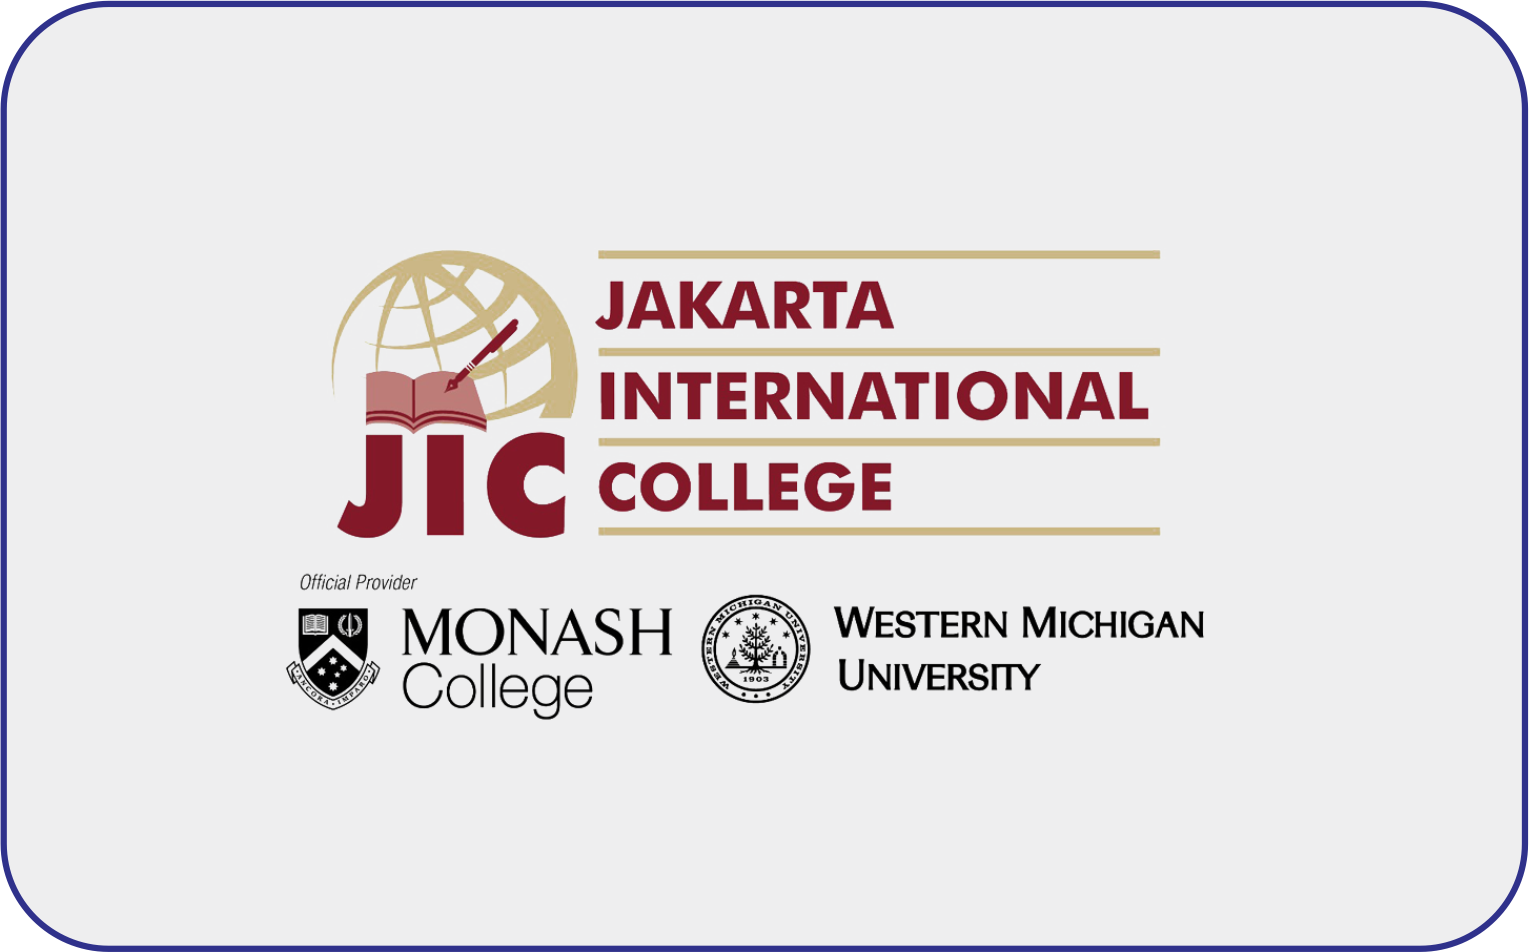 Jakarta International College (JIC) -Monash College – Western Michigan University